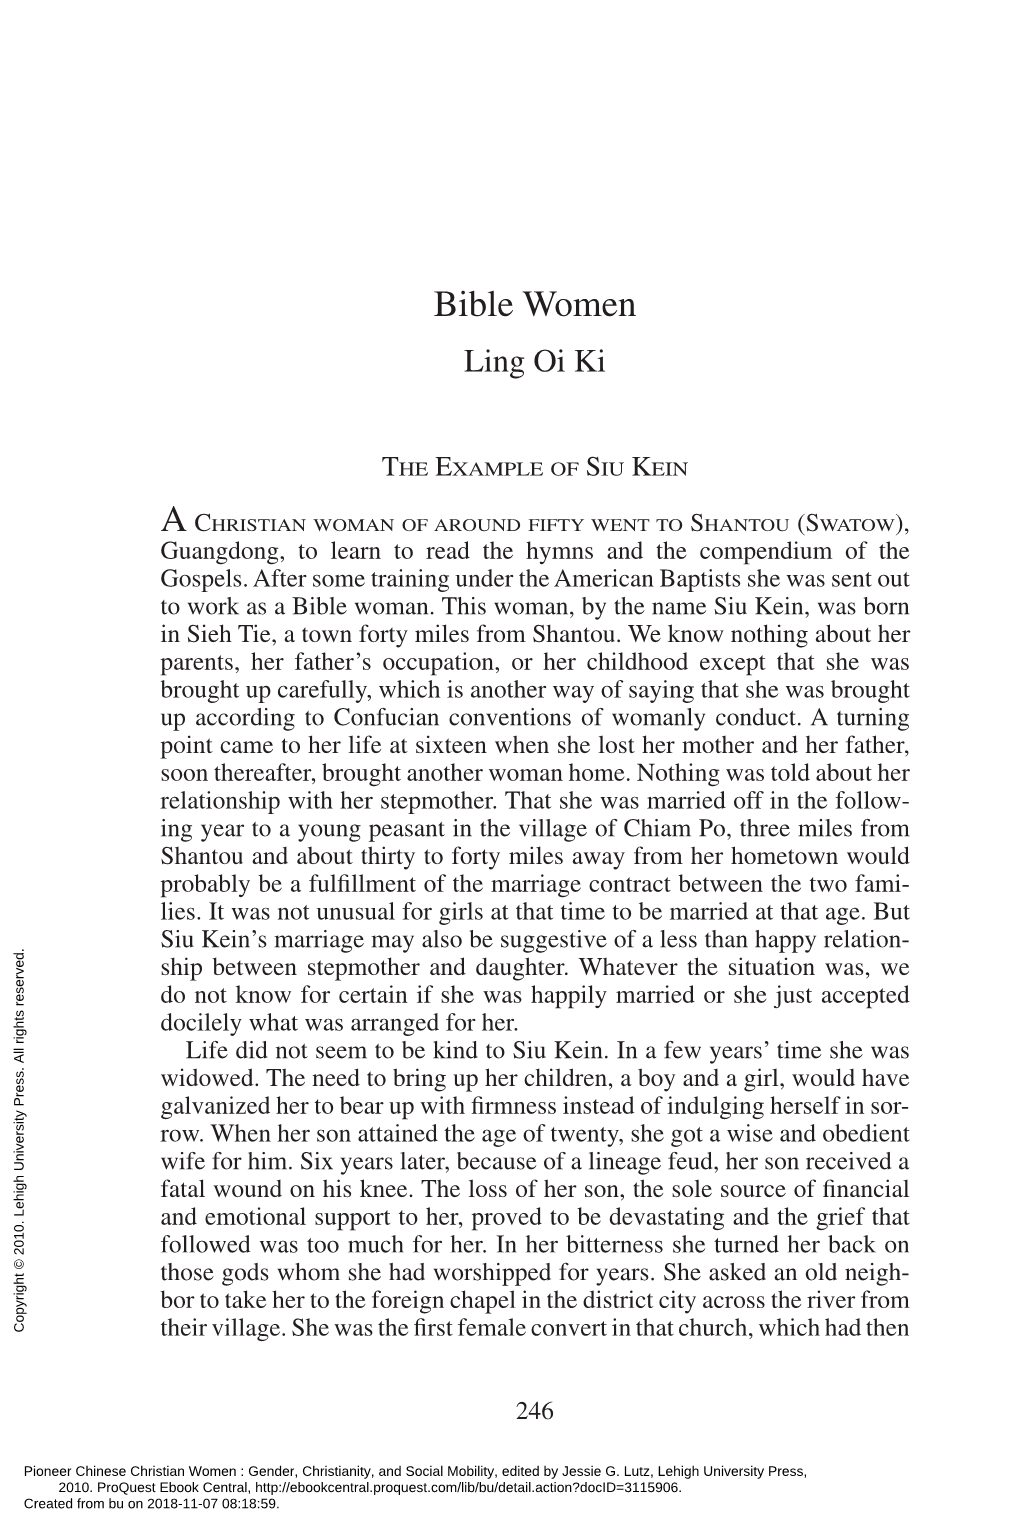 Bible Women Ling Oi Ki